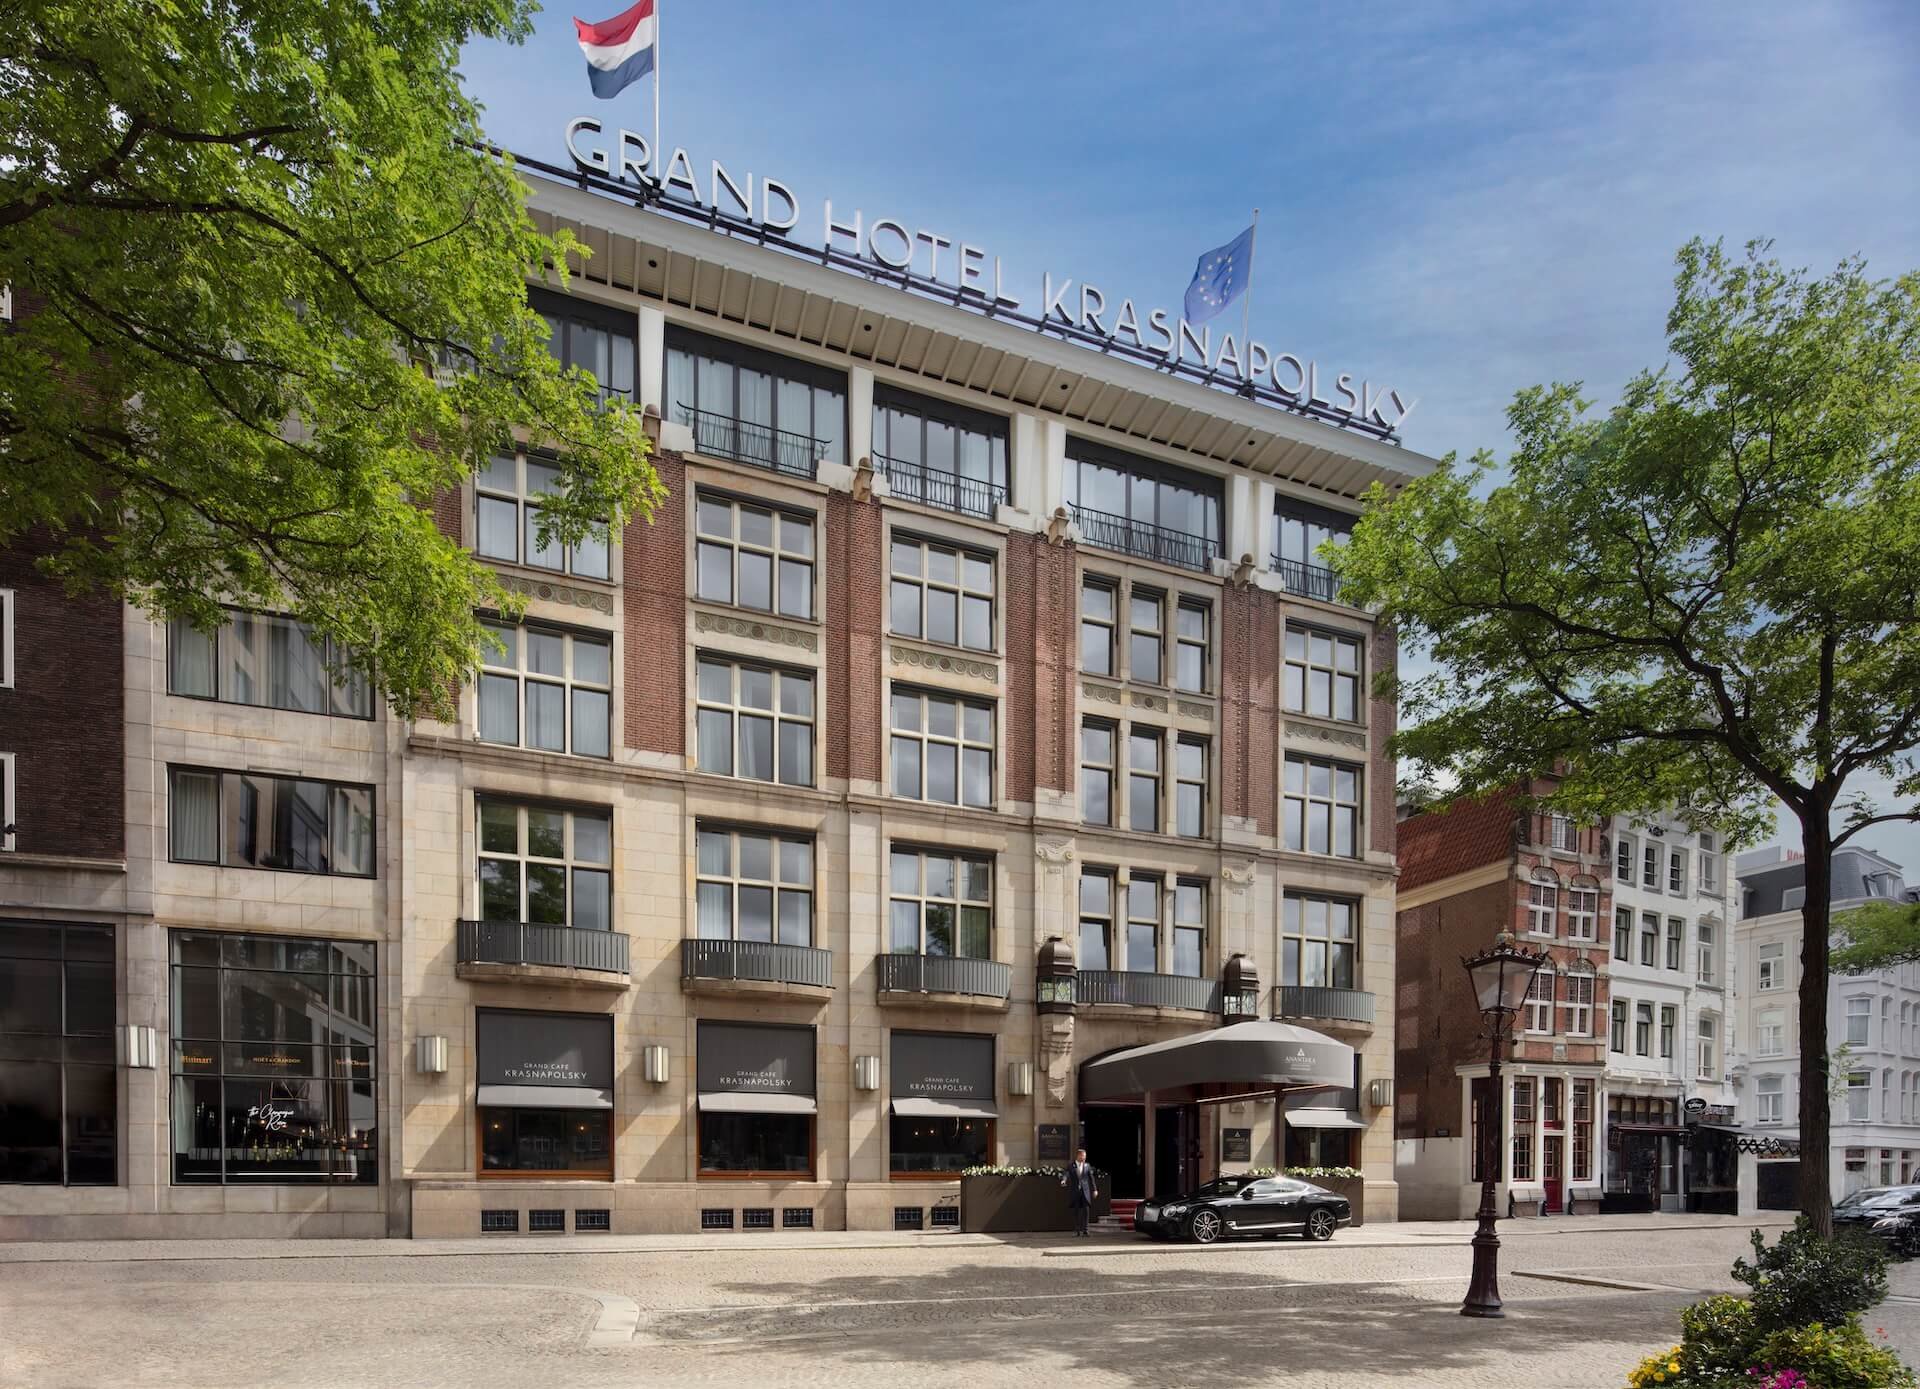 Anantara_Grand_Hotel_Krasnapolsky_Amsterdam_Building_Front_Facade.jpeg